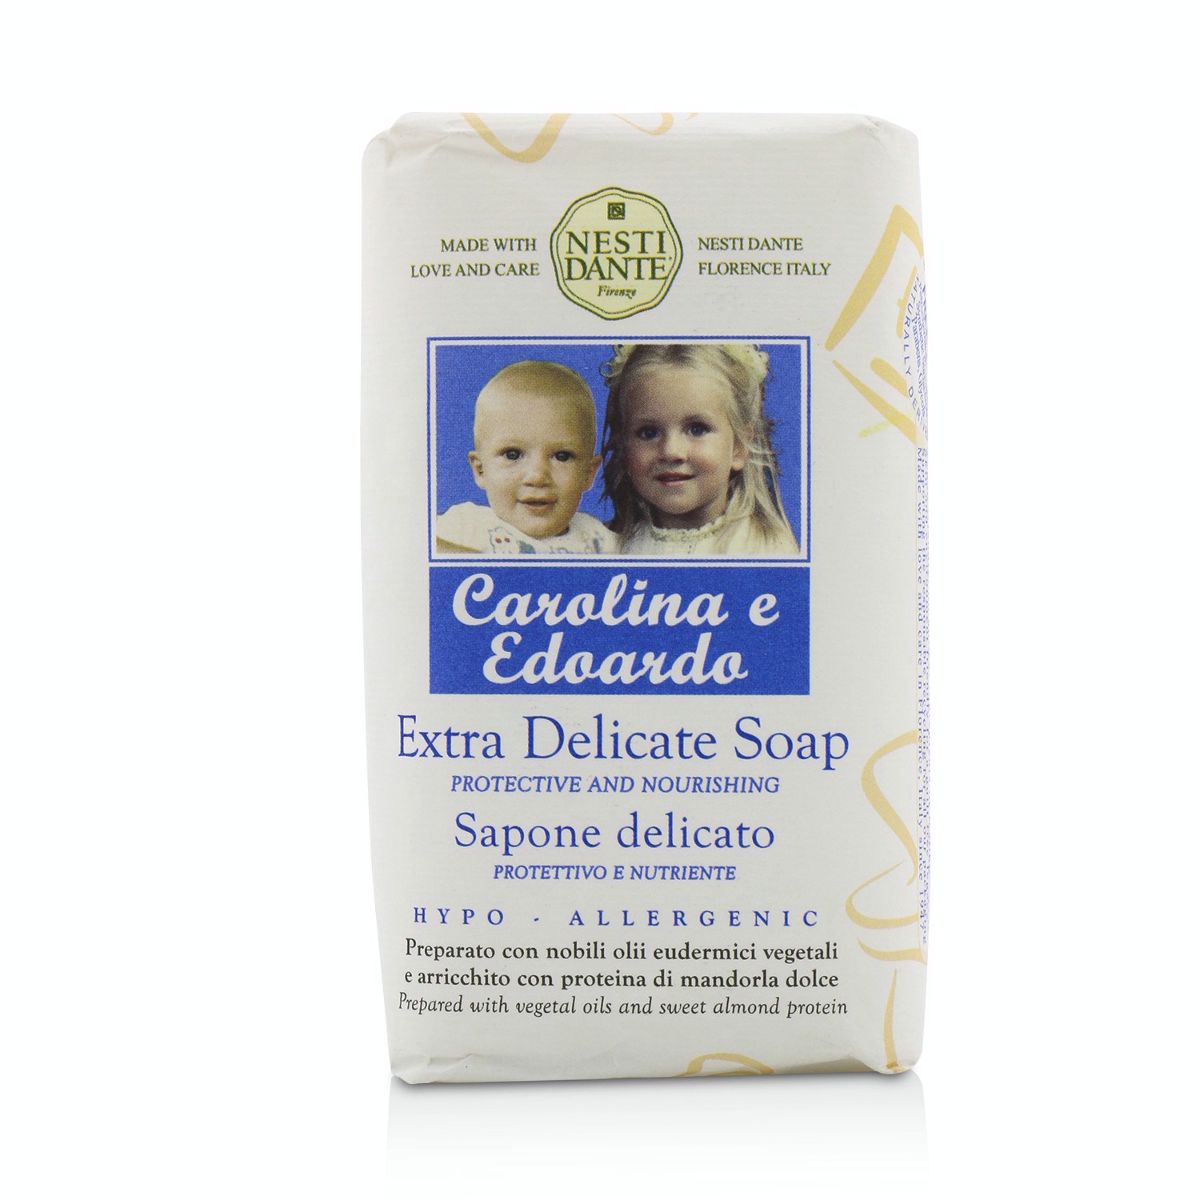 Carolina  Edoardo Extra Delicate Soap - Protective  Nourishing Nesti Dante Image